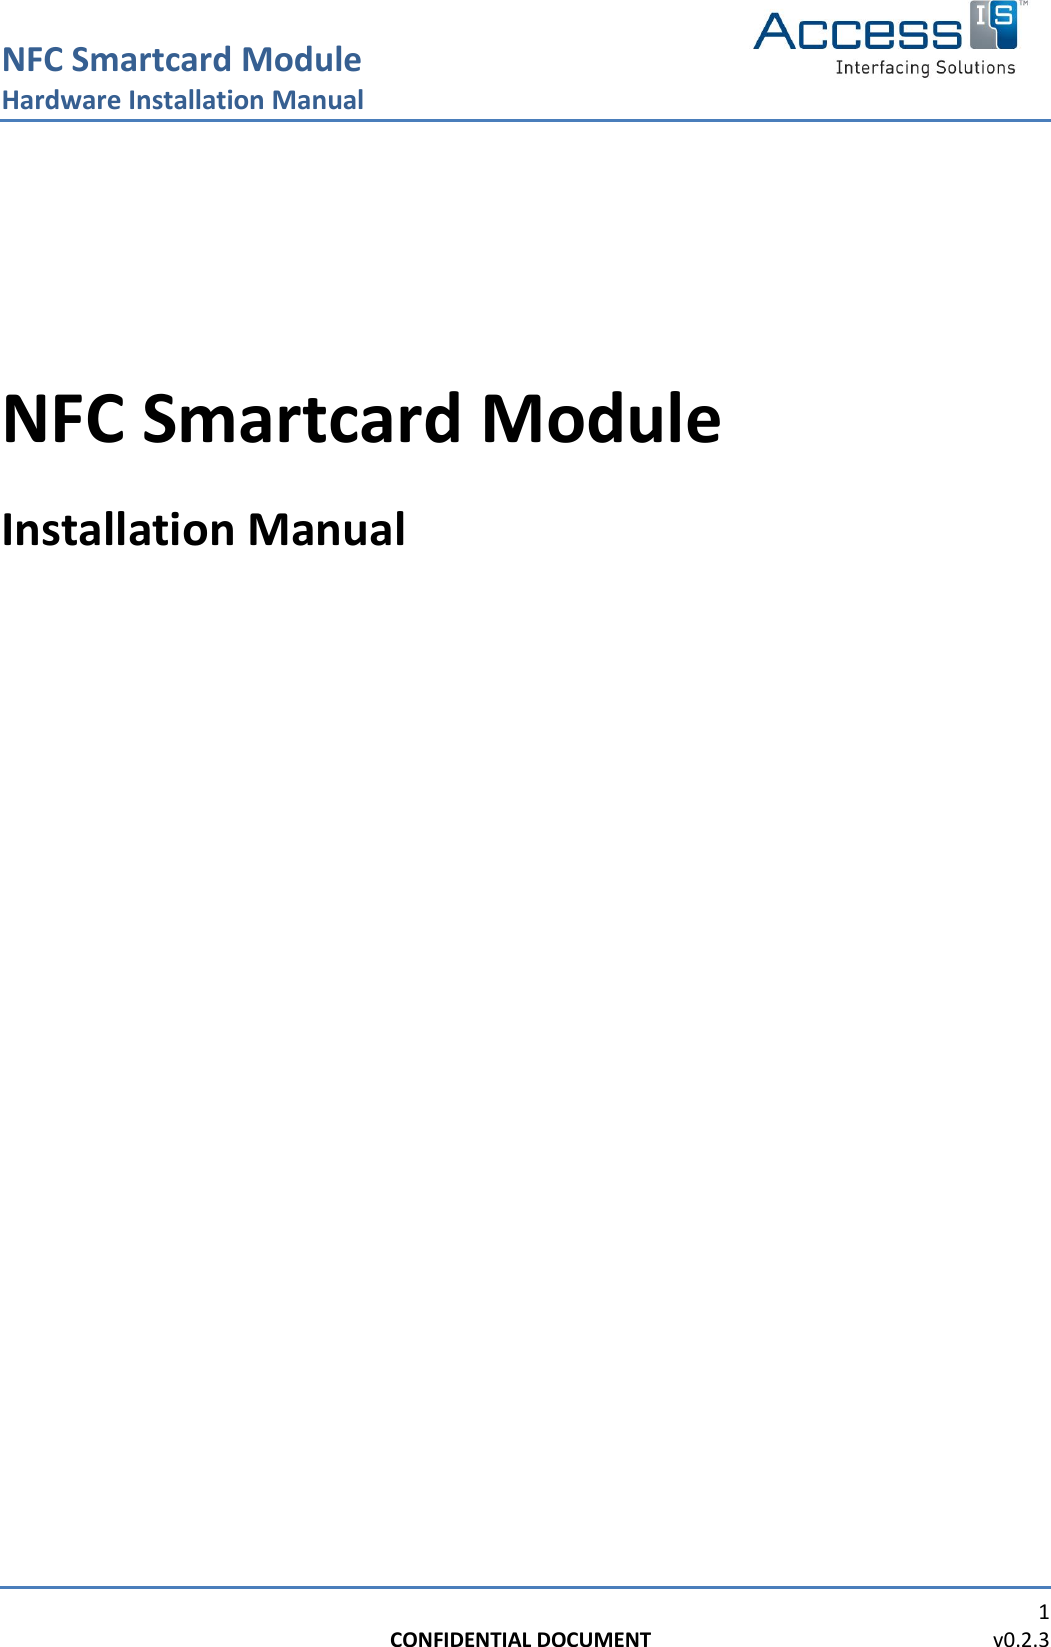 NFC Smartcard Module Hardware Installation Manual   1 CONFIDENTIAL DOCUMENT                                                                  v0.2.3     NFC Smartcard Module  Installation Manual    